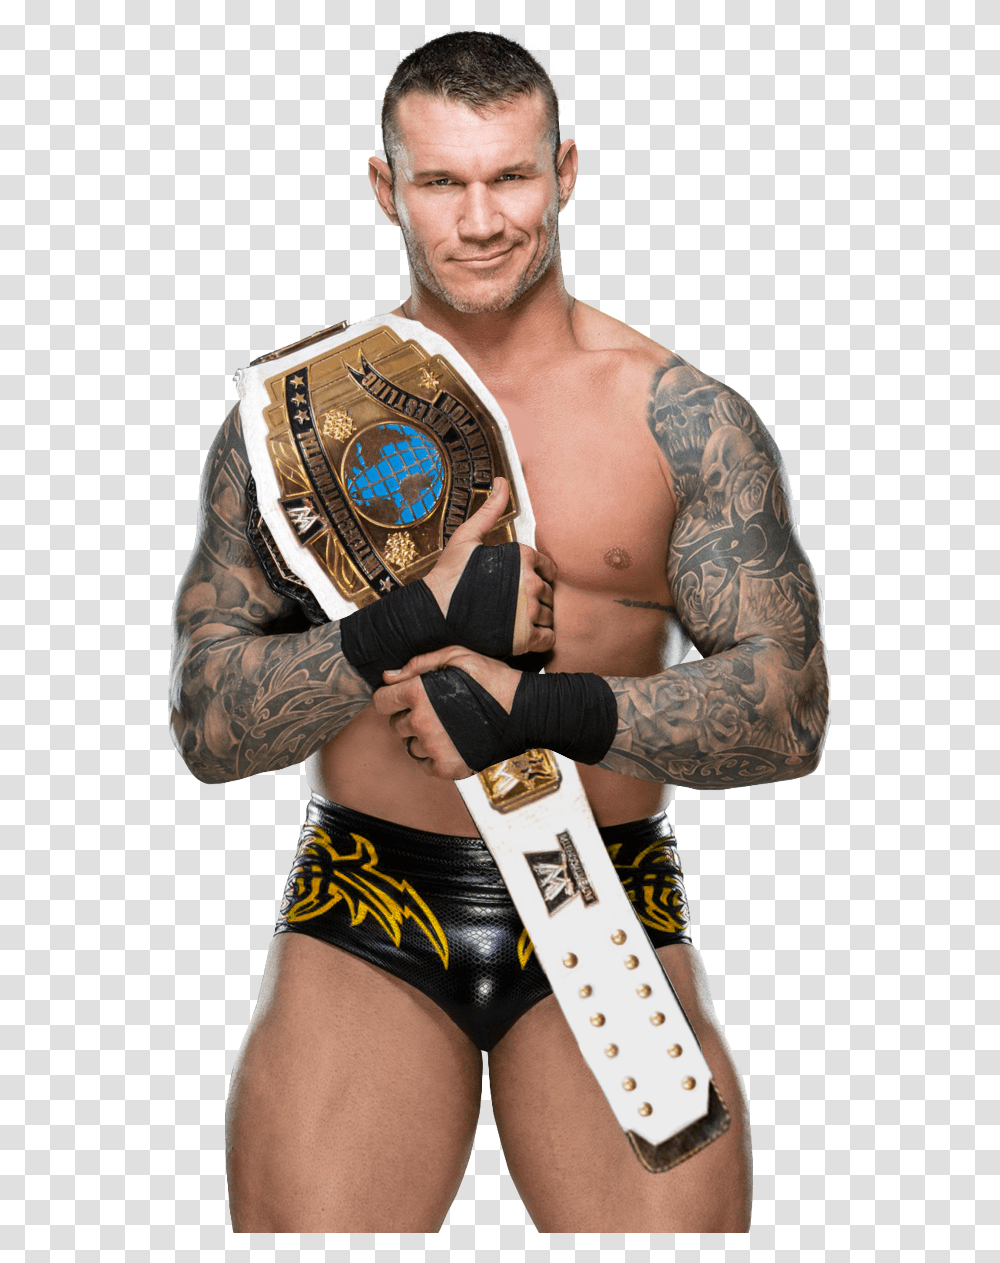 Randyorton Randalkeithorton Rko Theviper Apexpredator Randy Orton Wwe Champion 2019, Skin, Person, Human, Tattoo Transparent Png